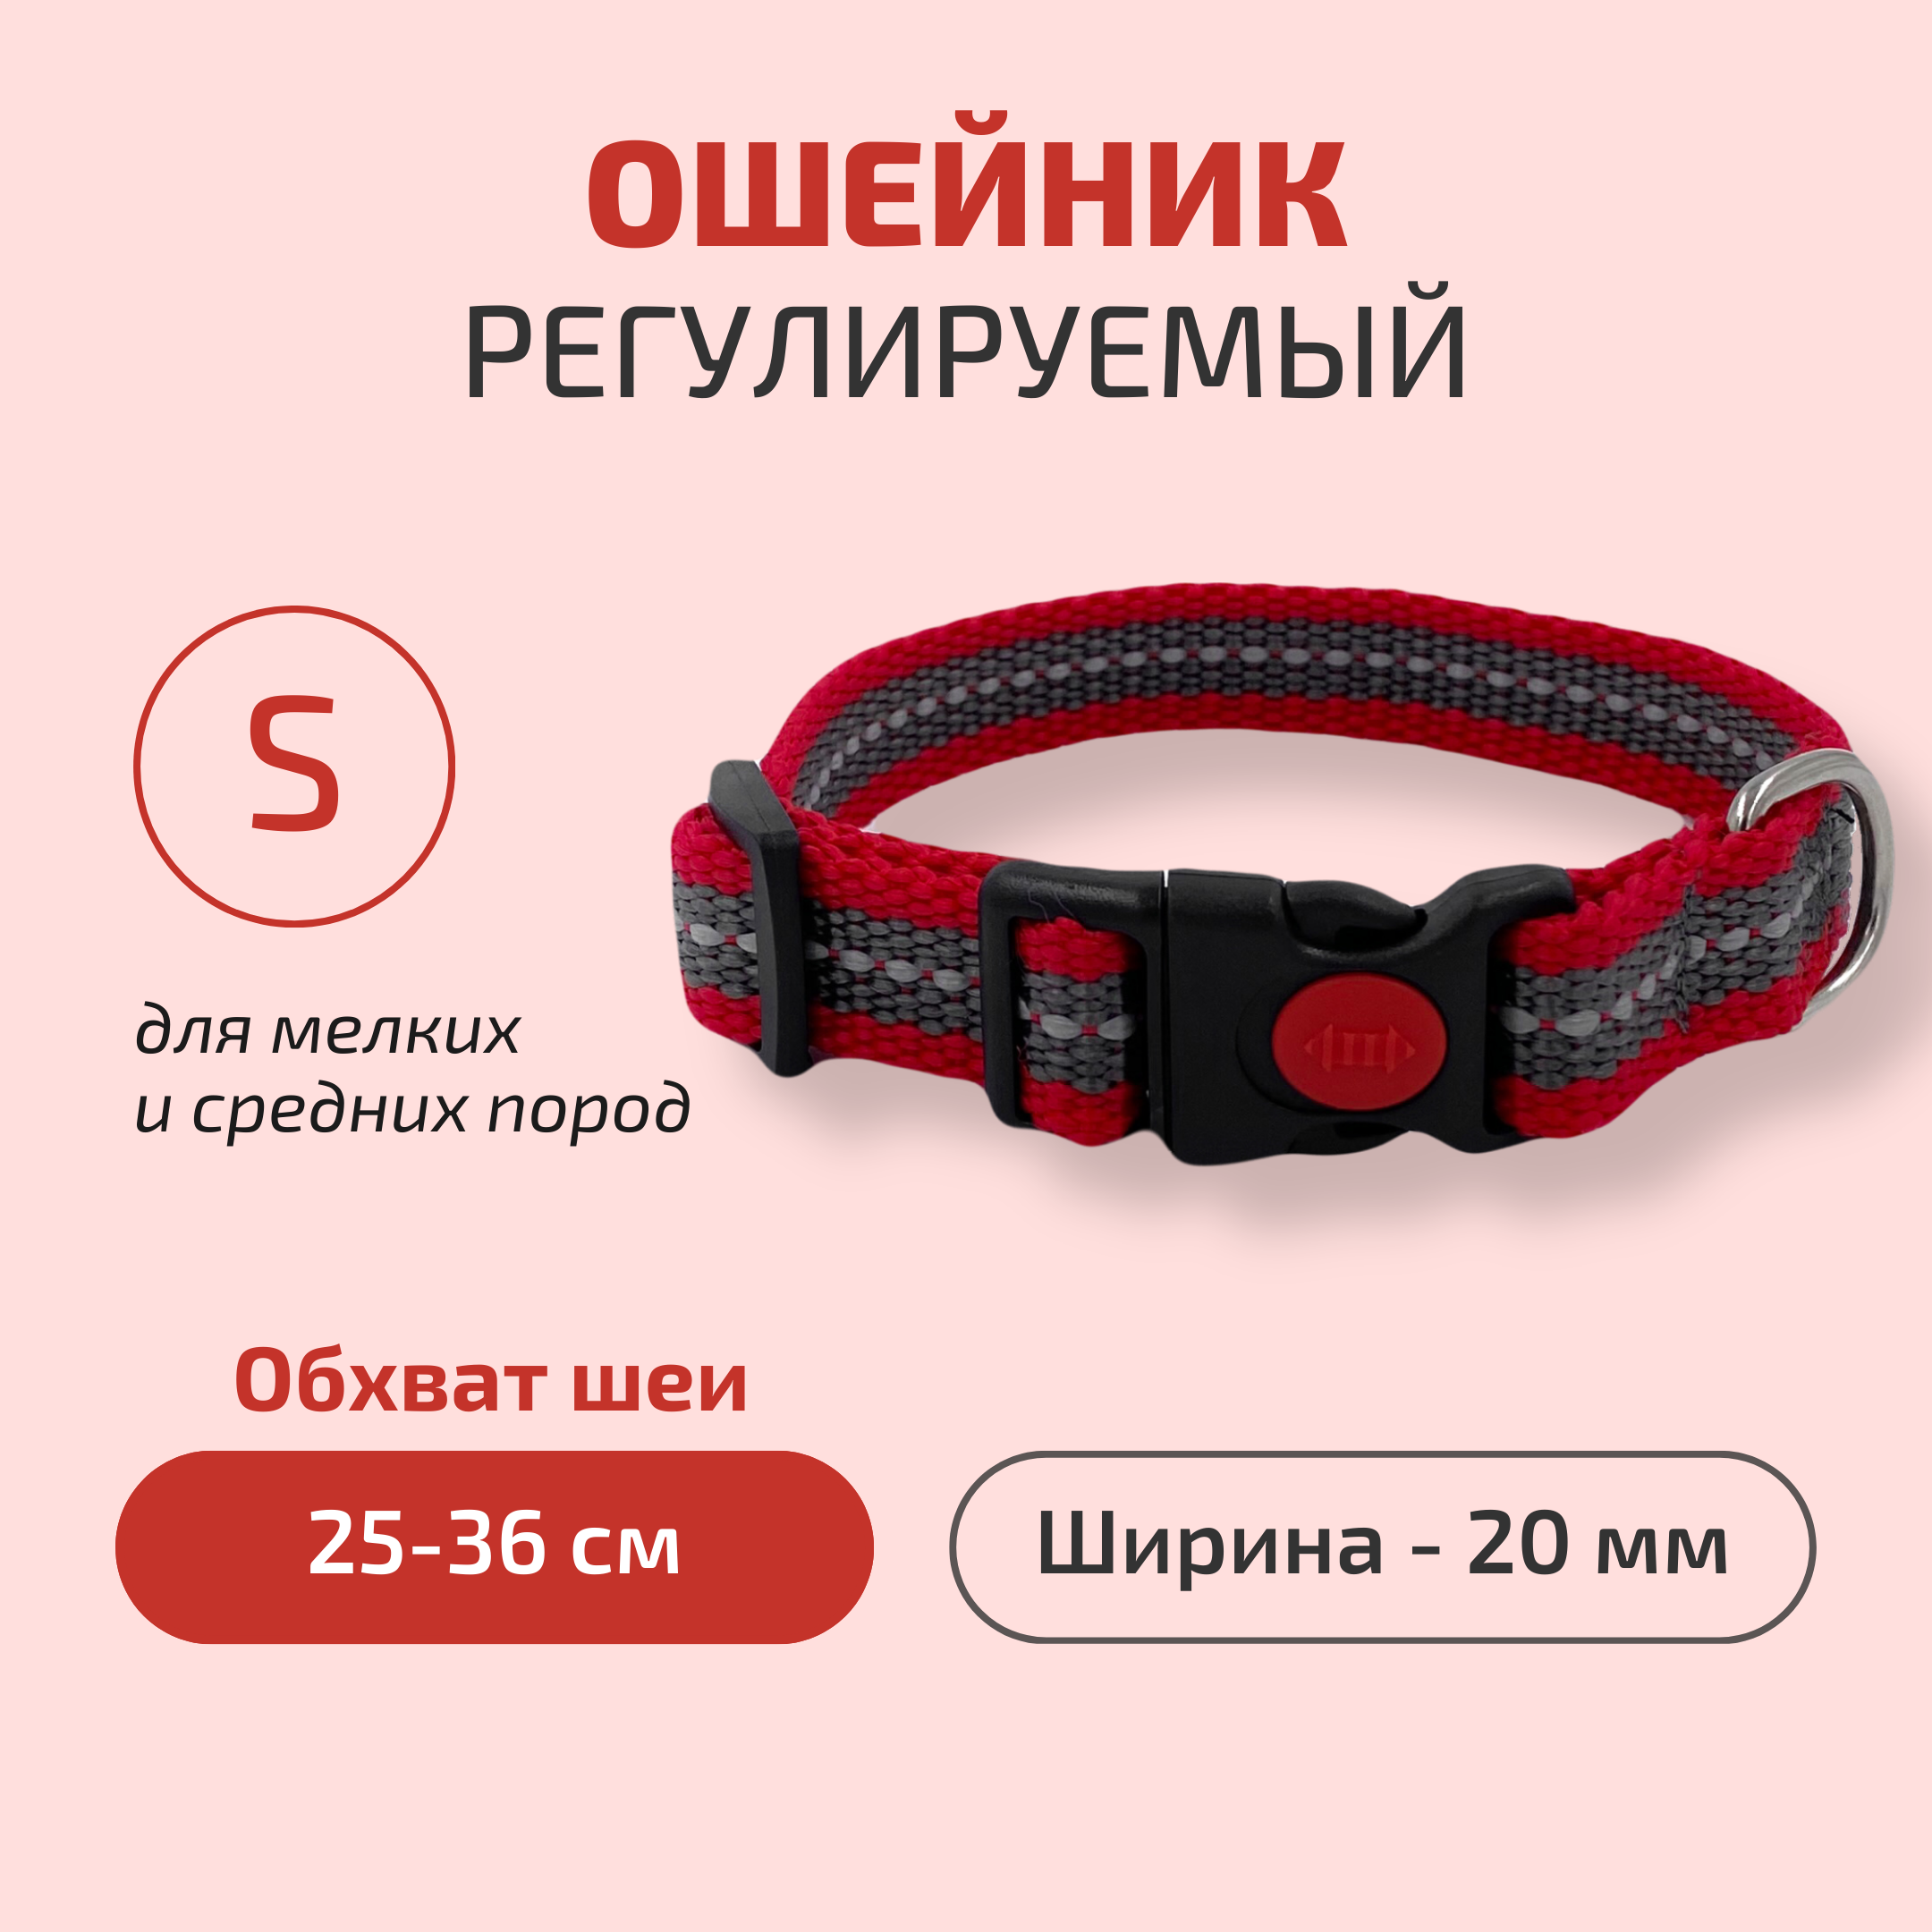 Ошейник для собак Povodki Shop красно-серый, ширина 20 мм, обхват шеи 25-36 см